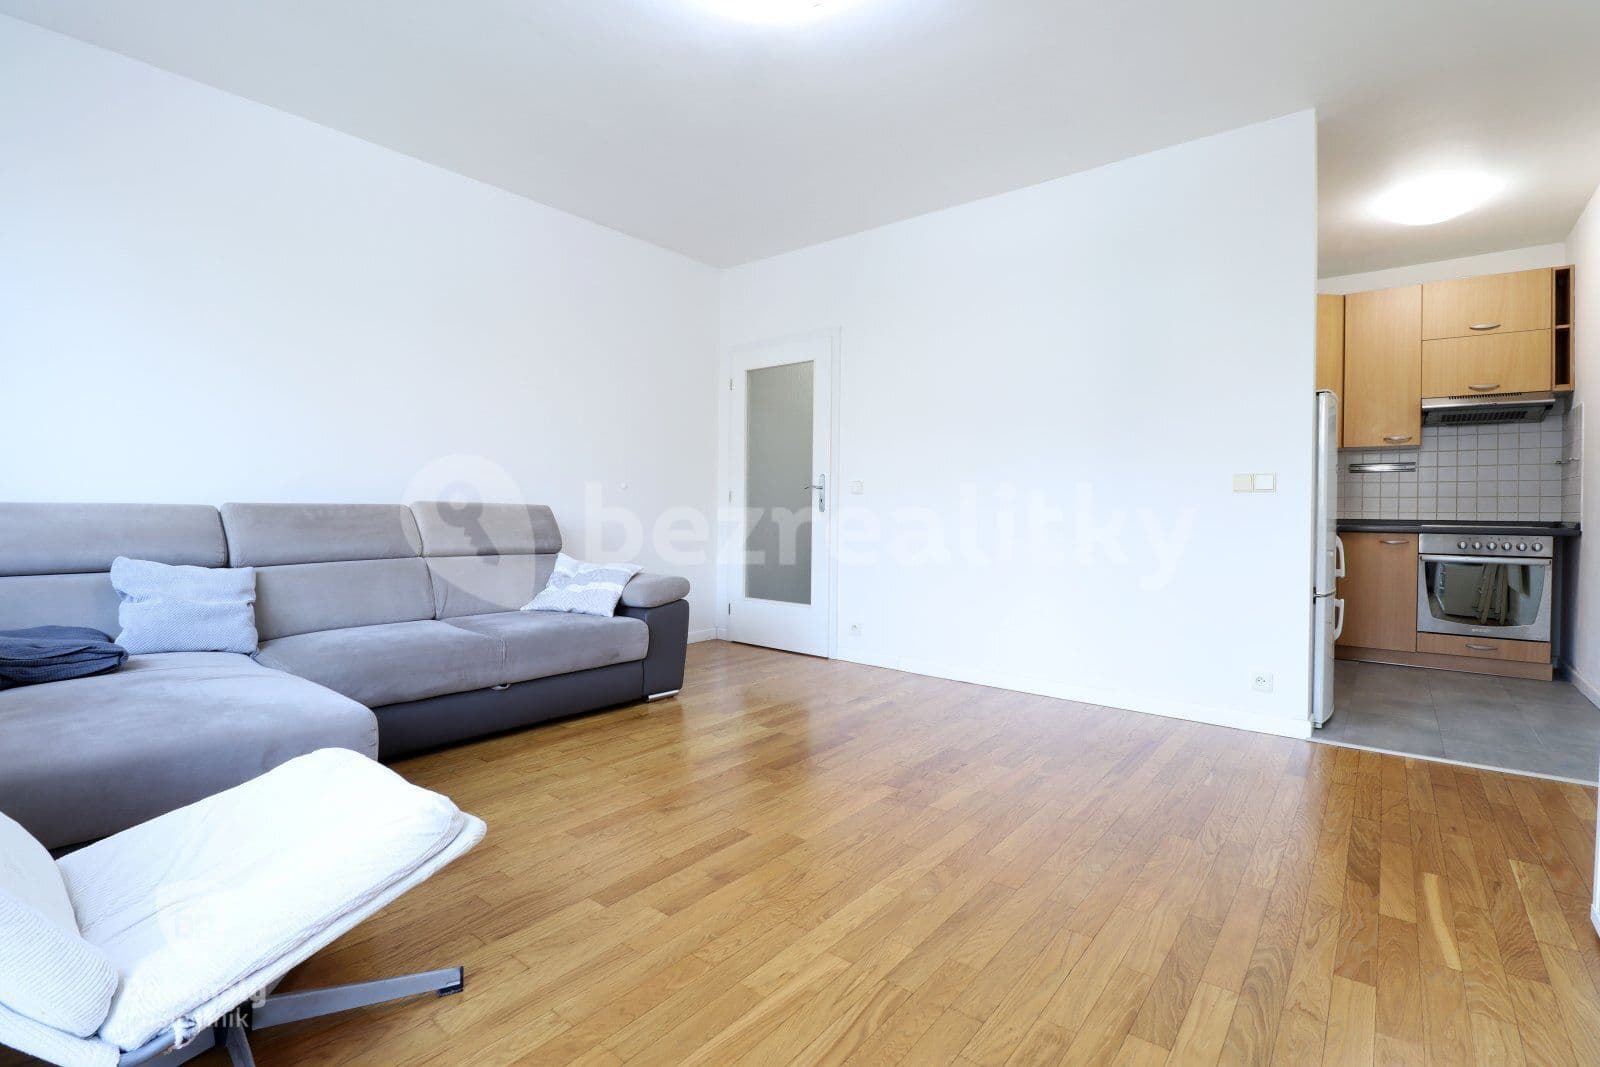 1 bedroom with open-plan kitchen flat to rent, 43 m², U michelského mlýna, Prague, Prague